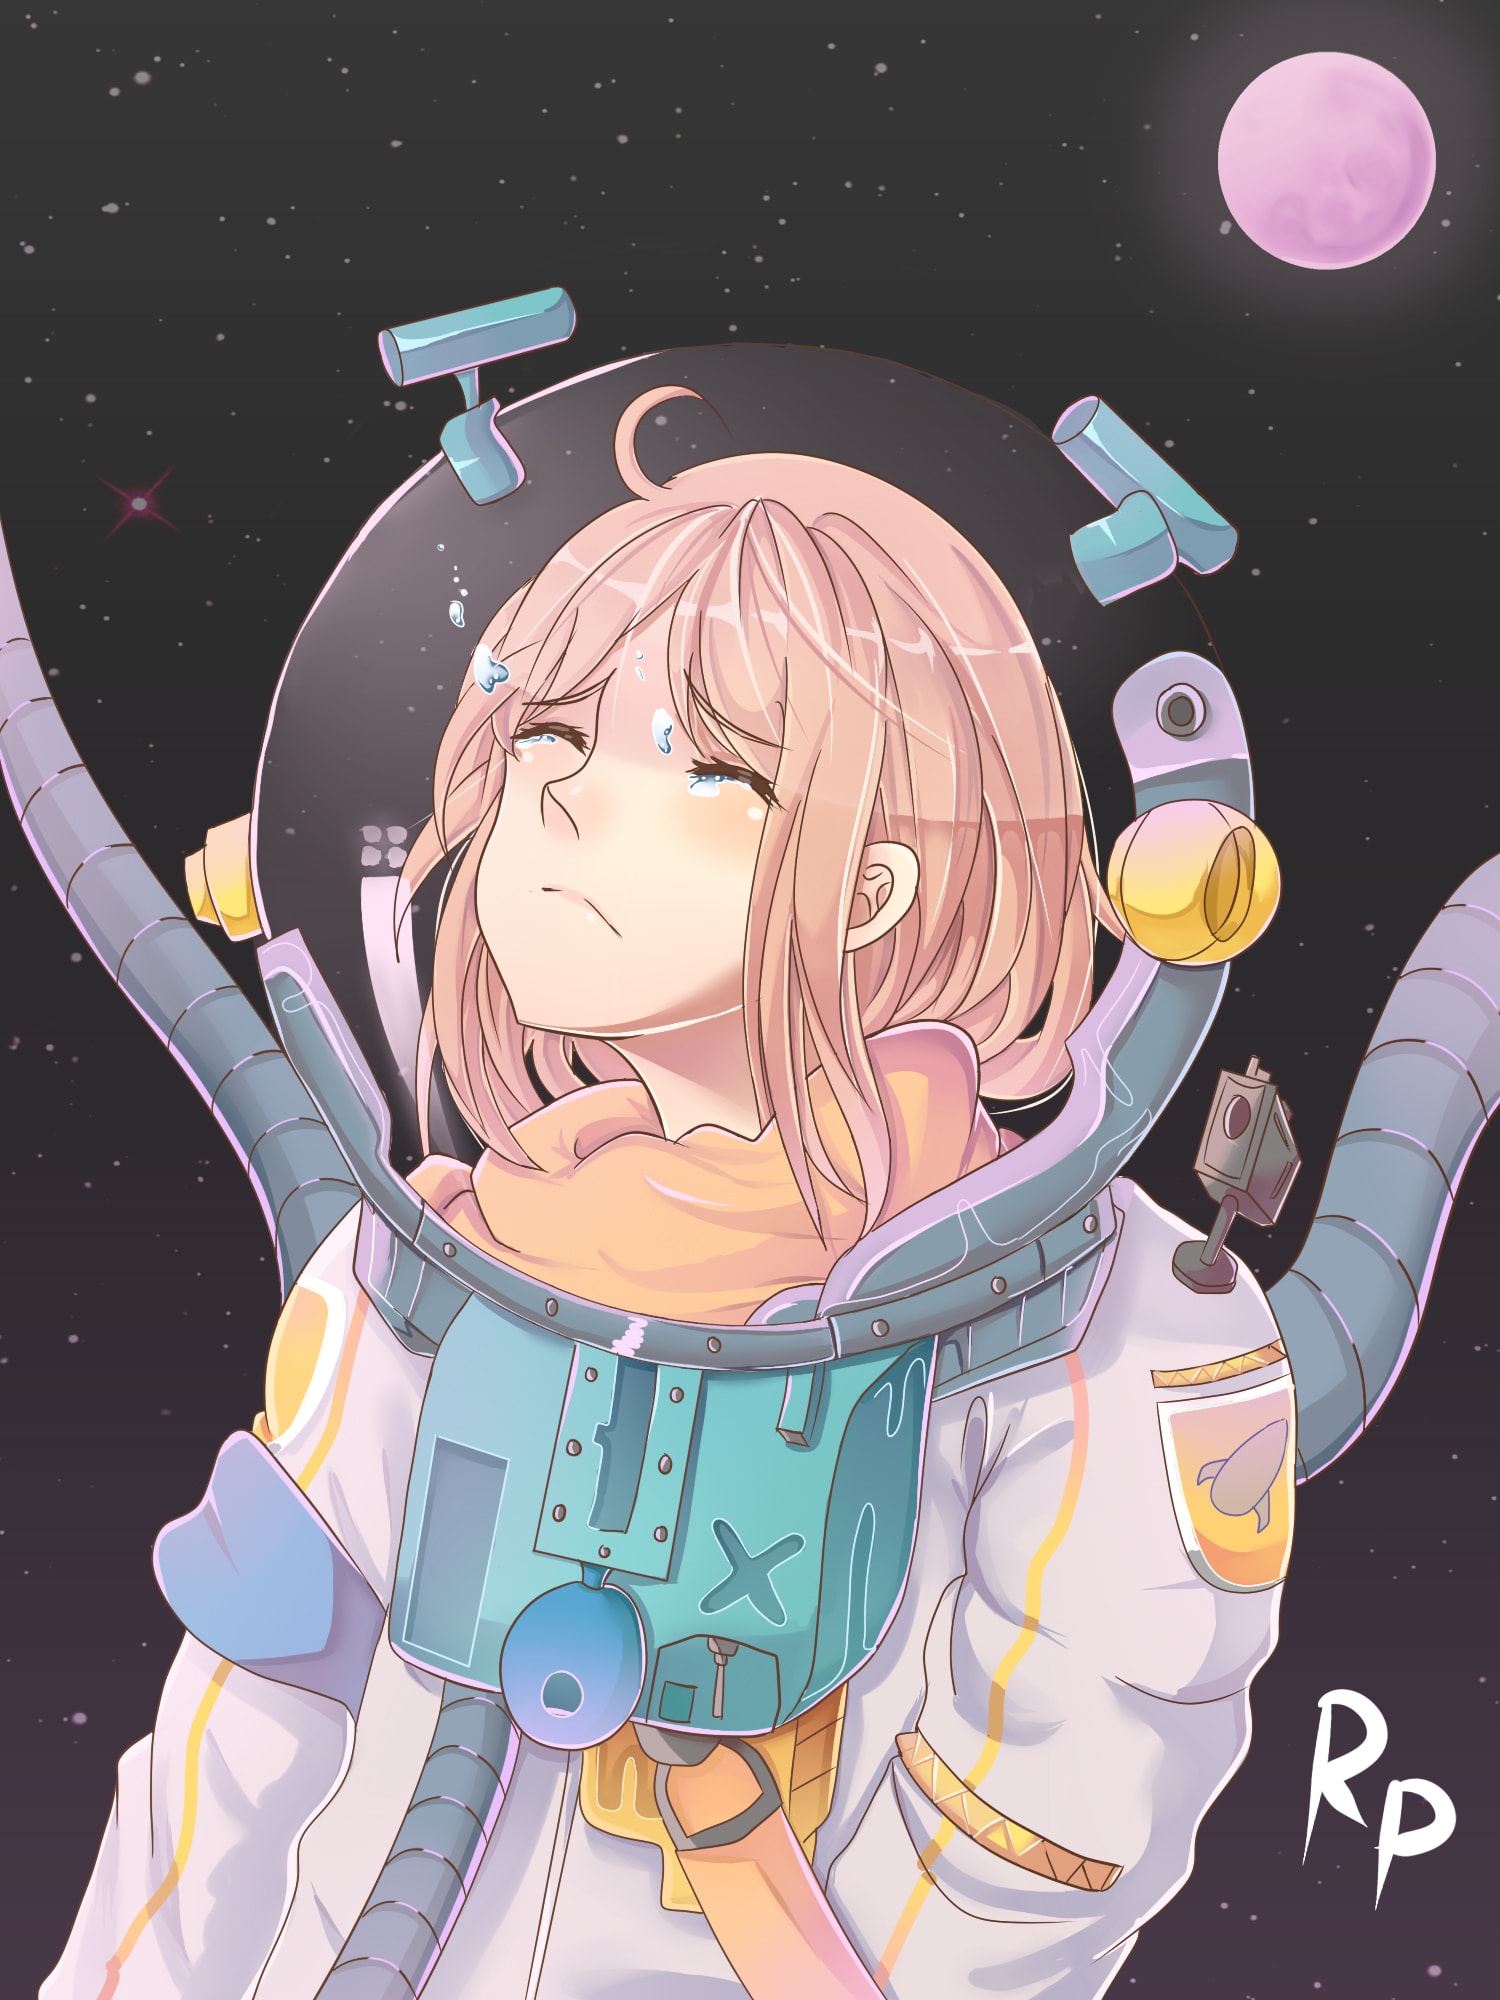 Chibi Astronaut Girl by WabiSabiWonders on DeviantArt